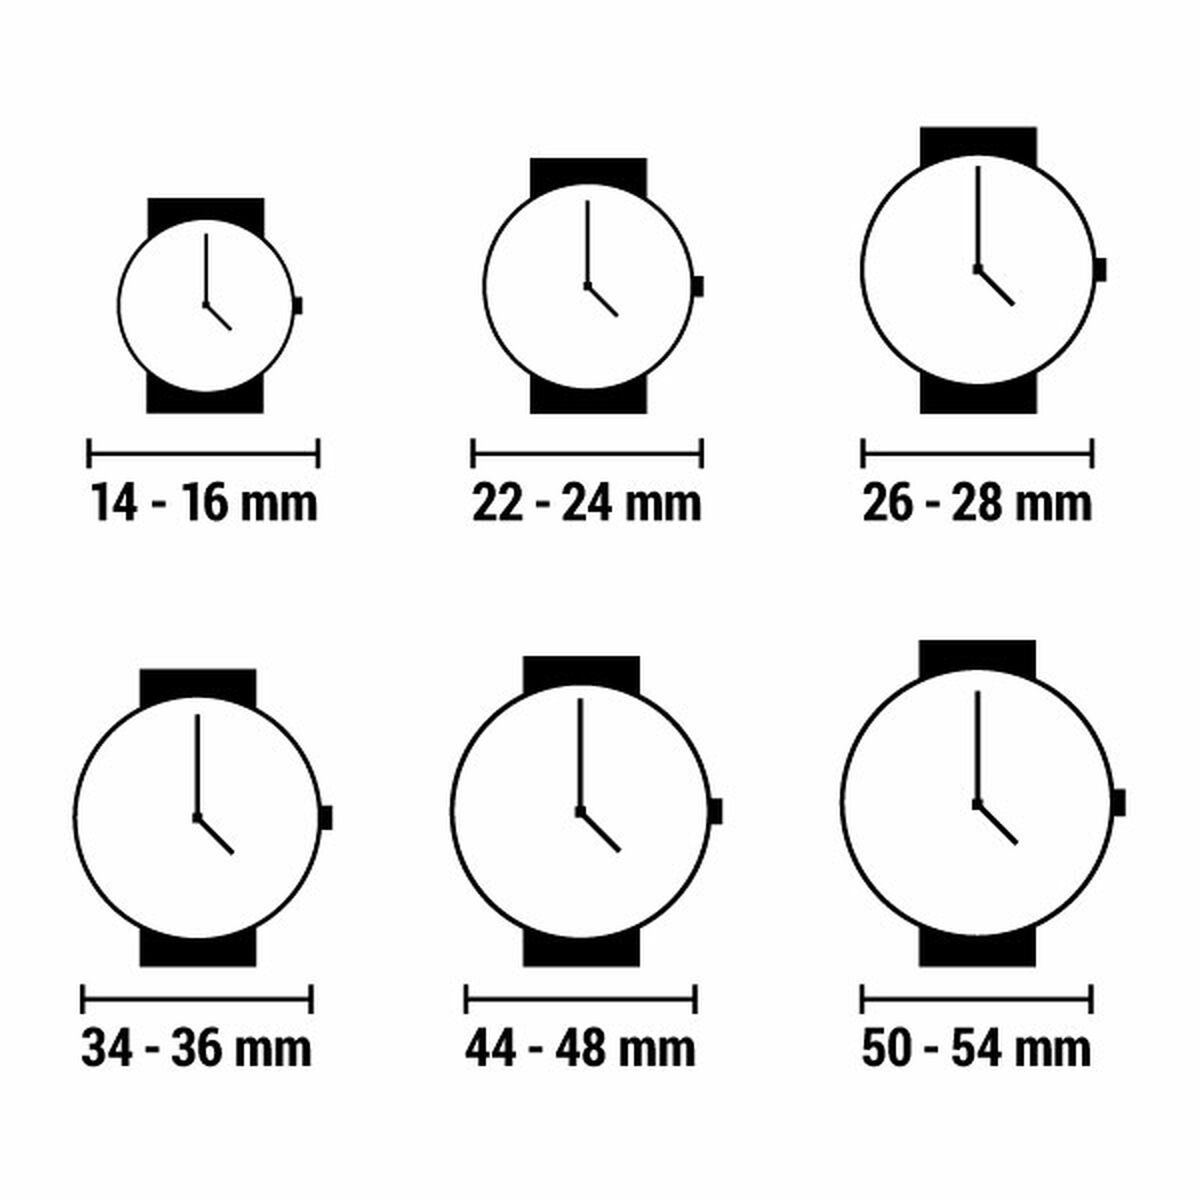 Horloge Dames Casio COLLECTION (Ø 30 mm)